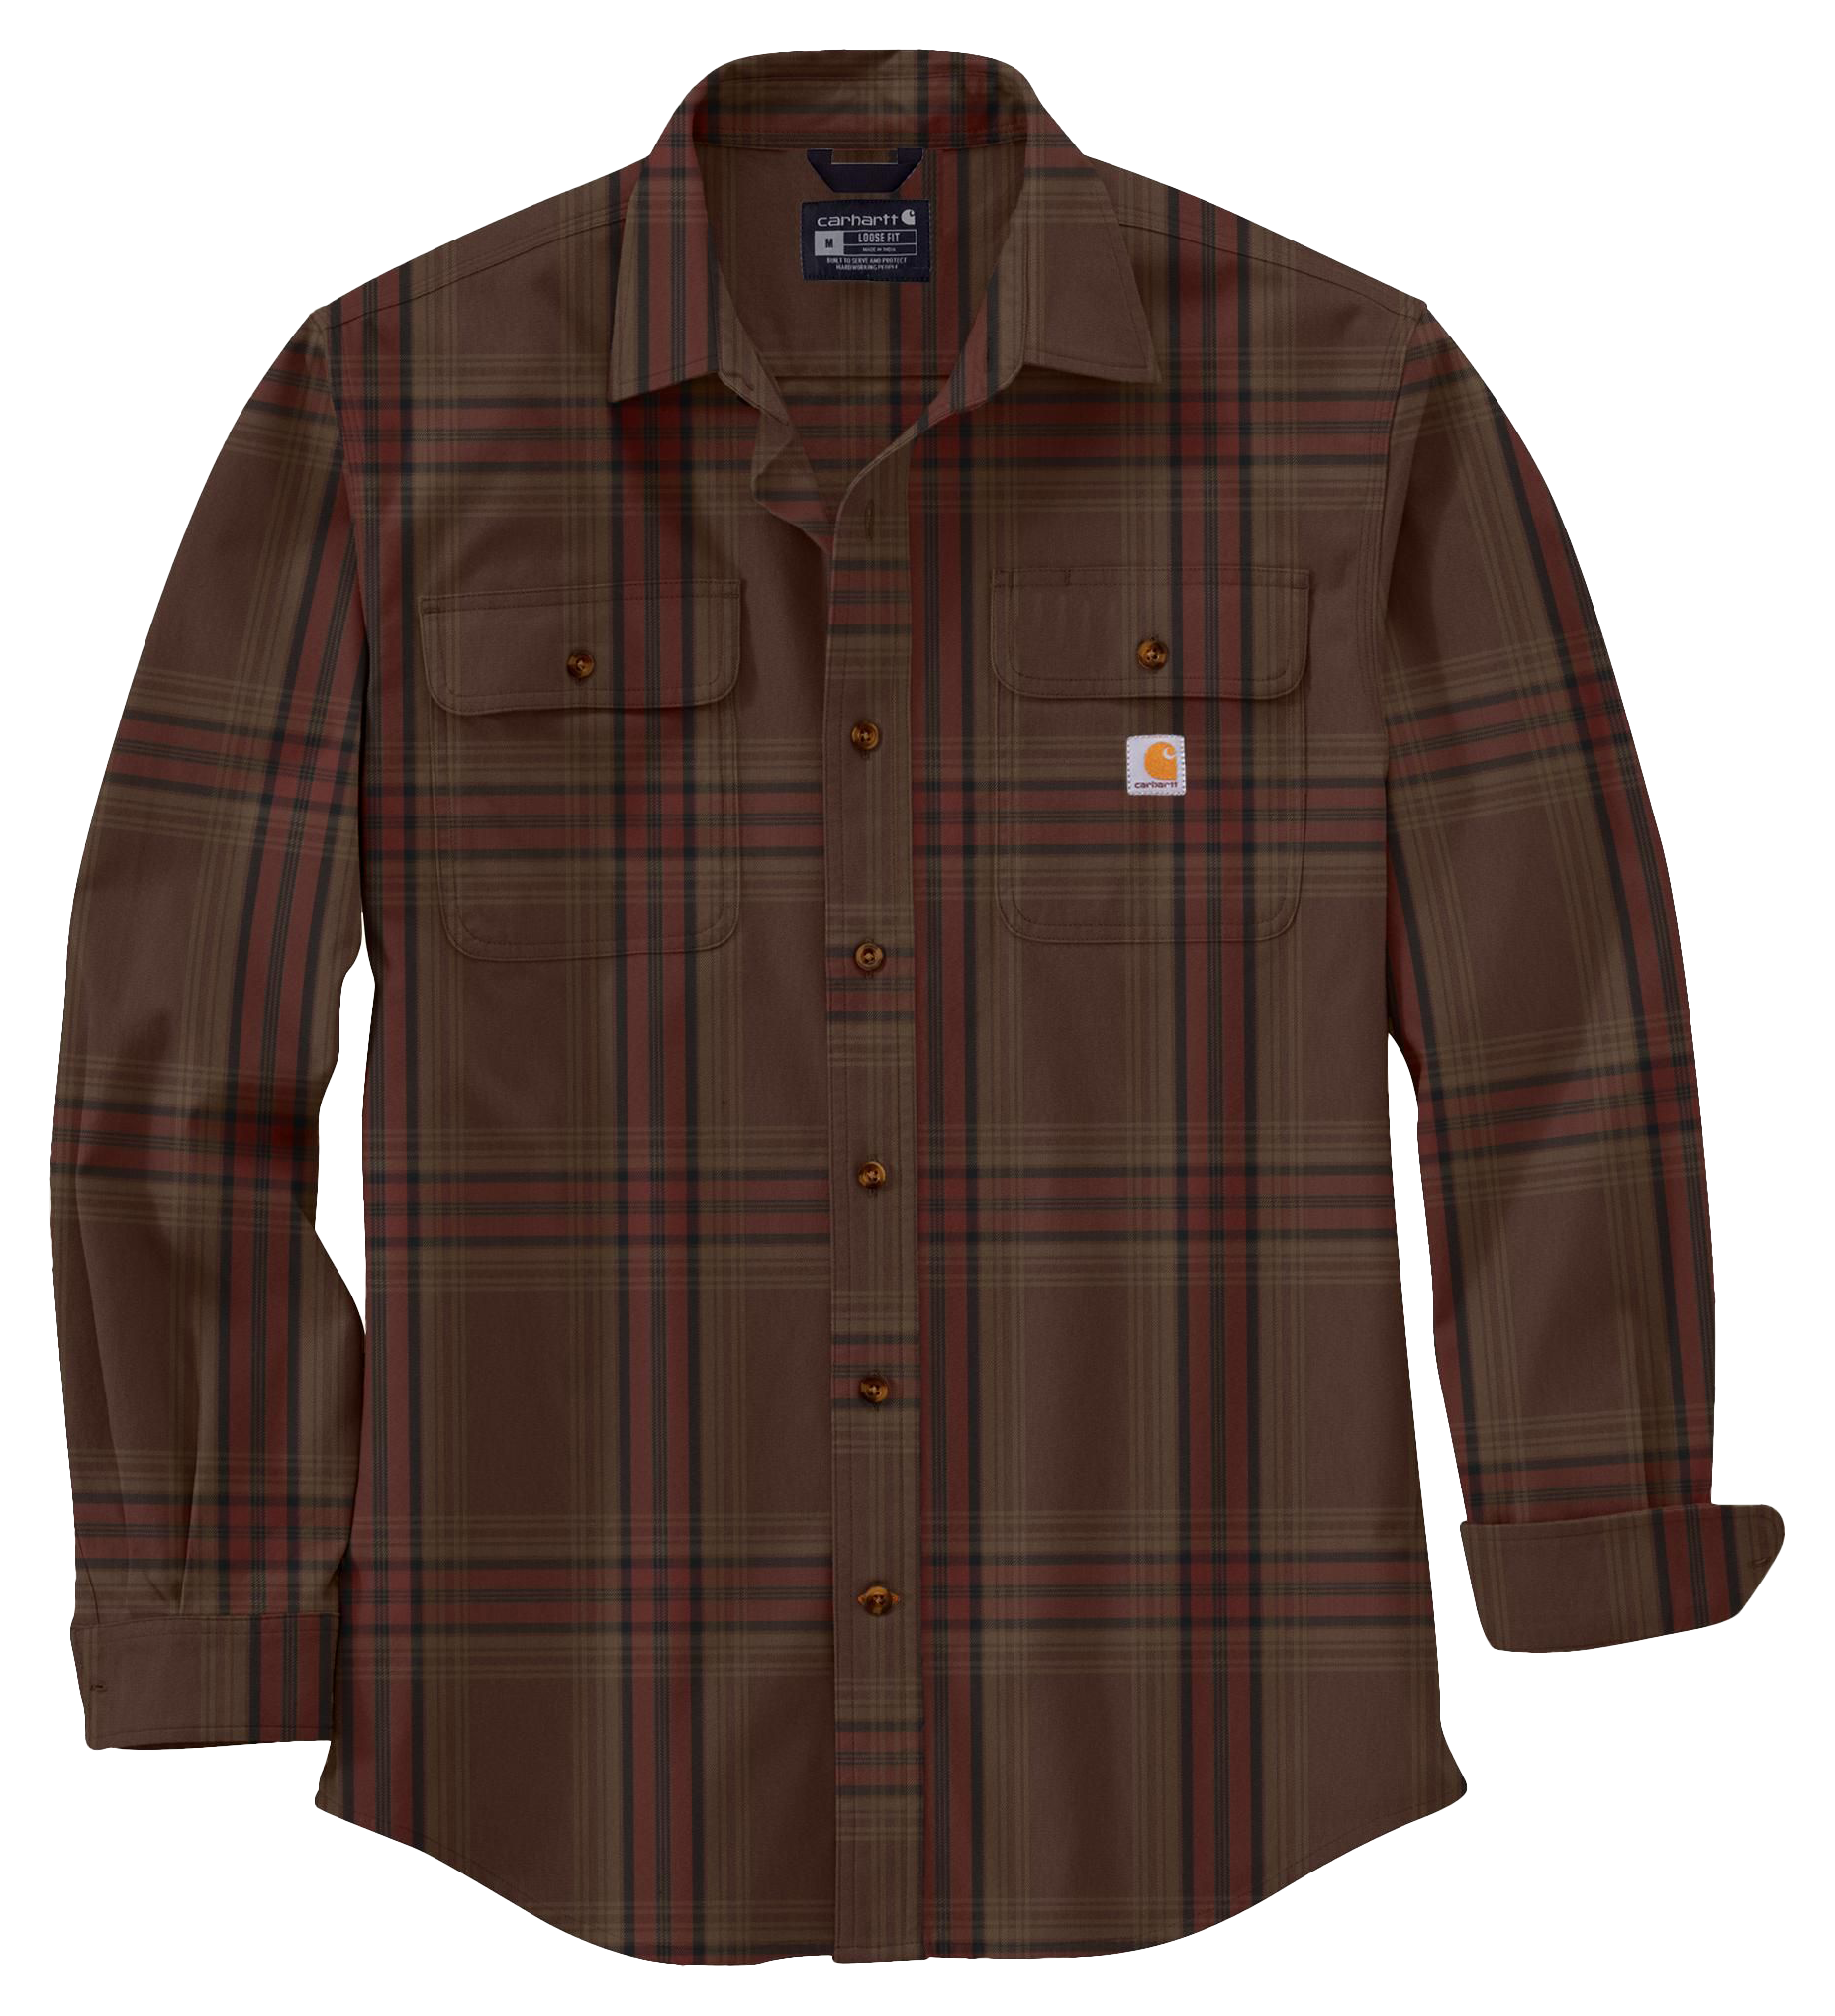 Carhartt Loose-Fit Heavyweight Flannel Plaid Long-Sleeve Button-Down Shirt for Men - Chestnut - 3XLT